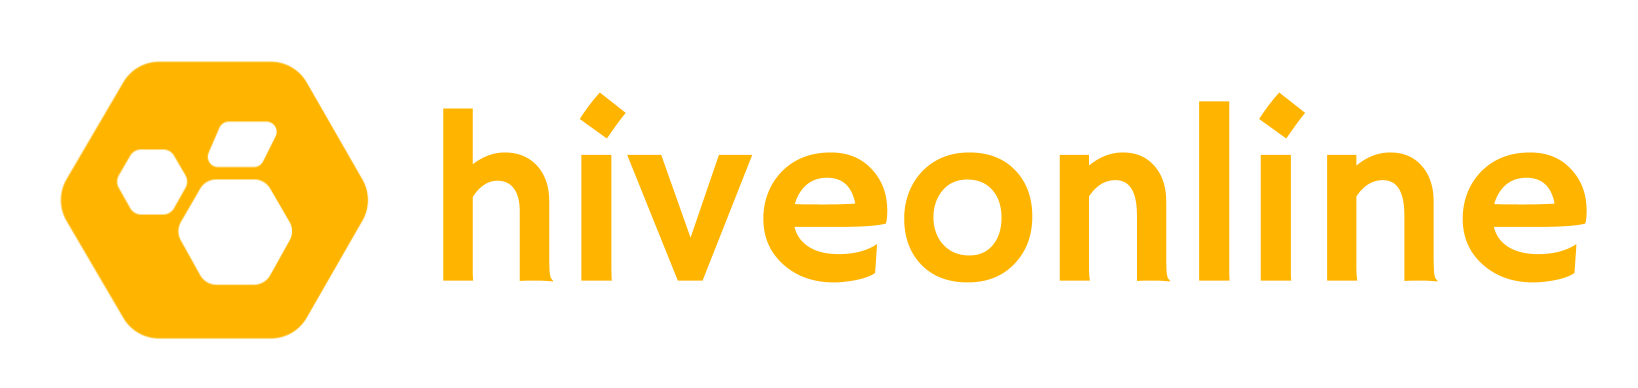 hiveonline logo